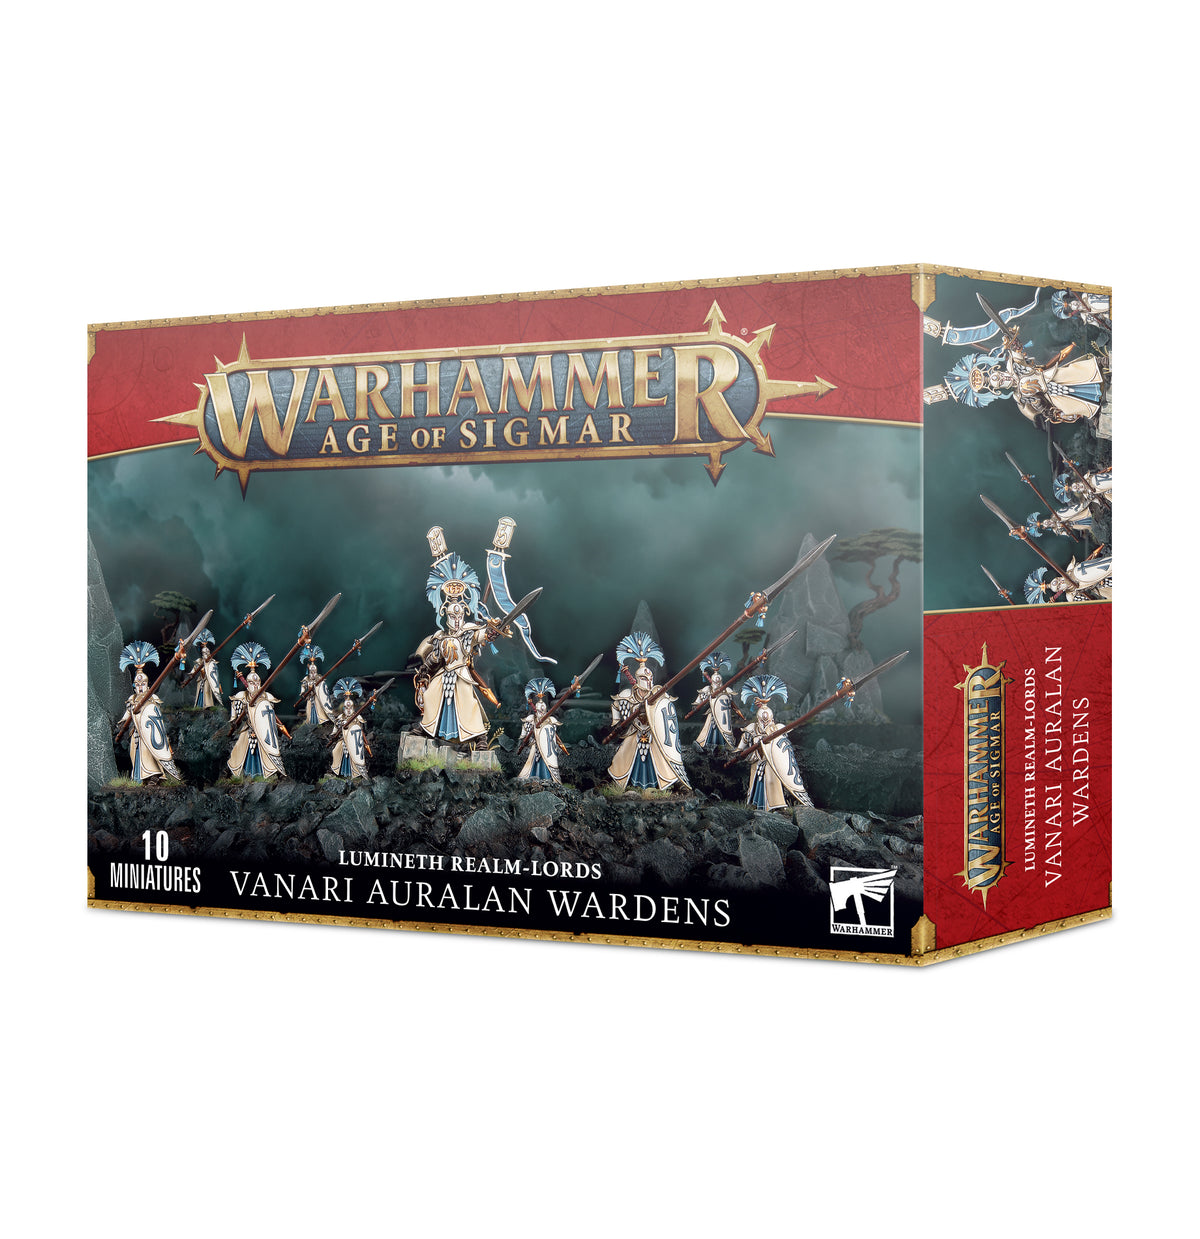 Lumineth Realm-Lords - Vanari Auralan Wardens (Warhammer Age of Sigmar)